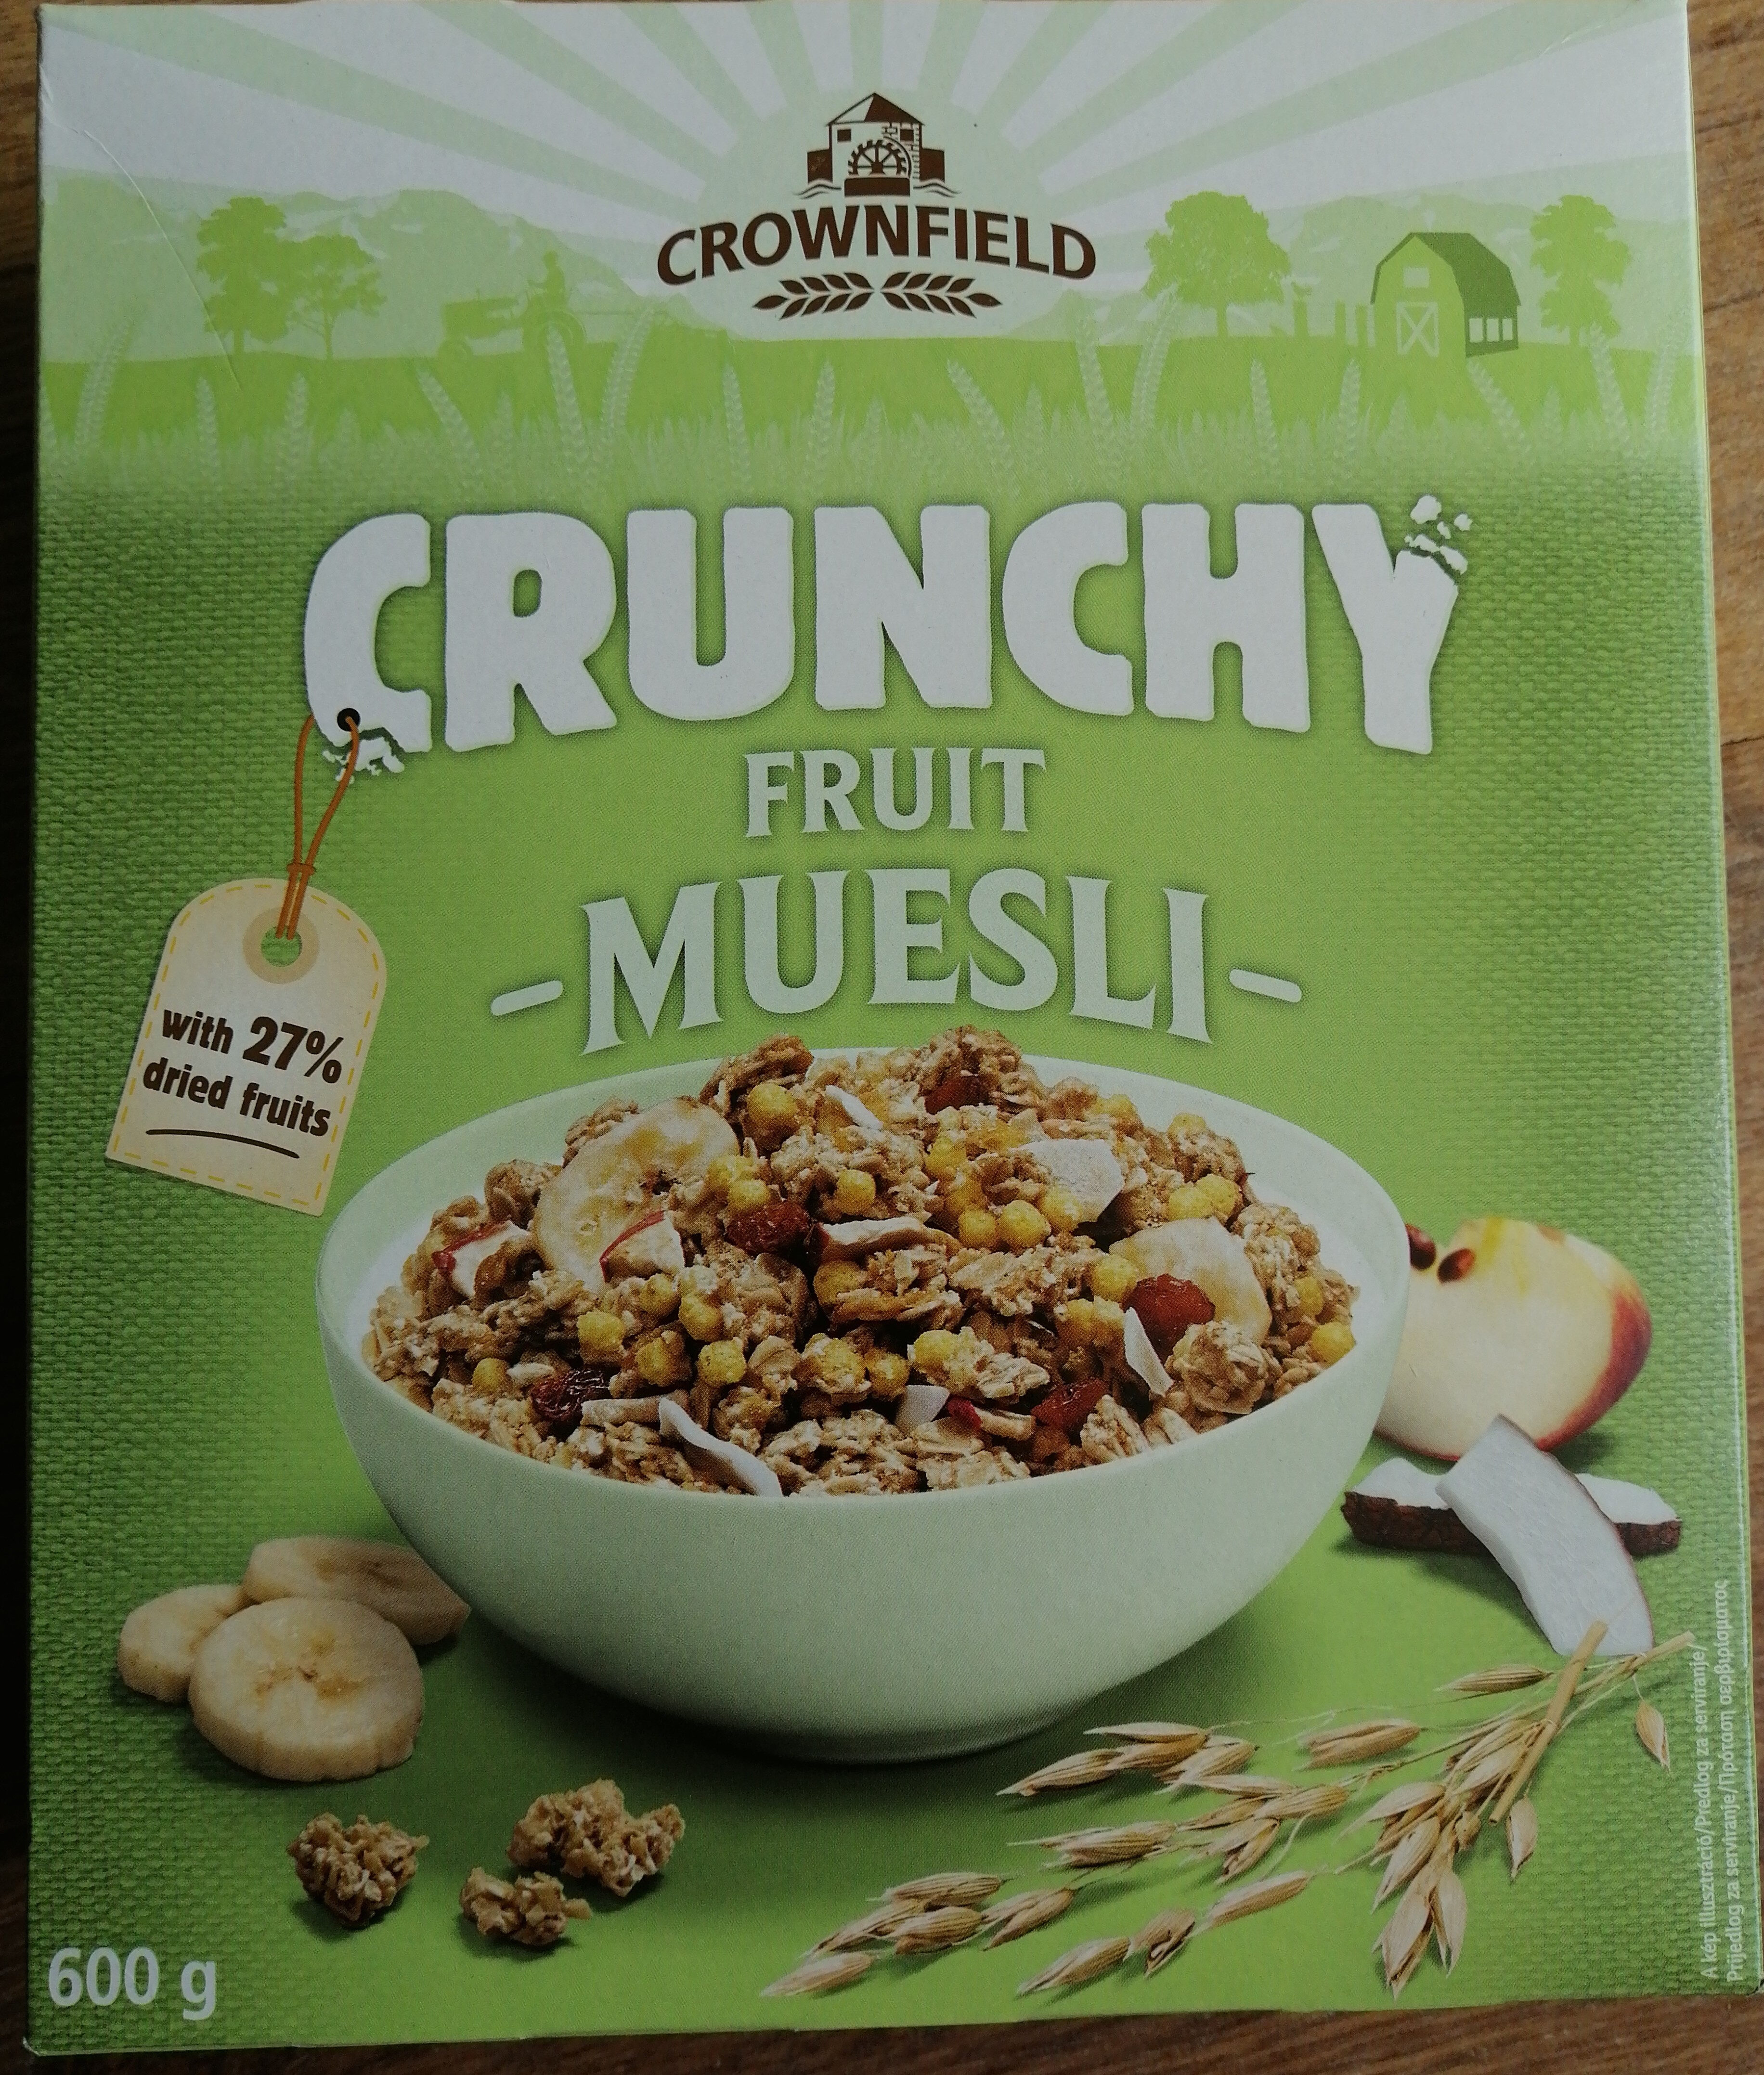 Crunchy fruit muesli - Product - en